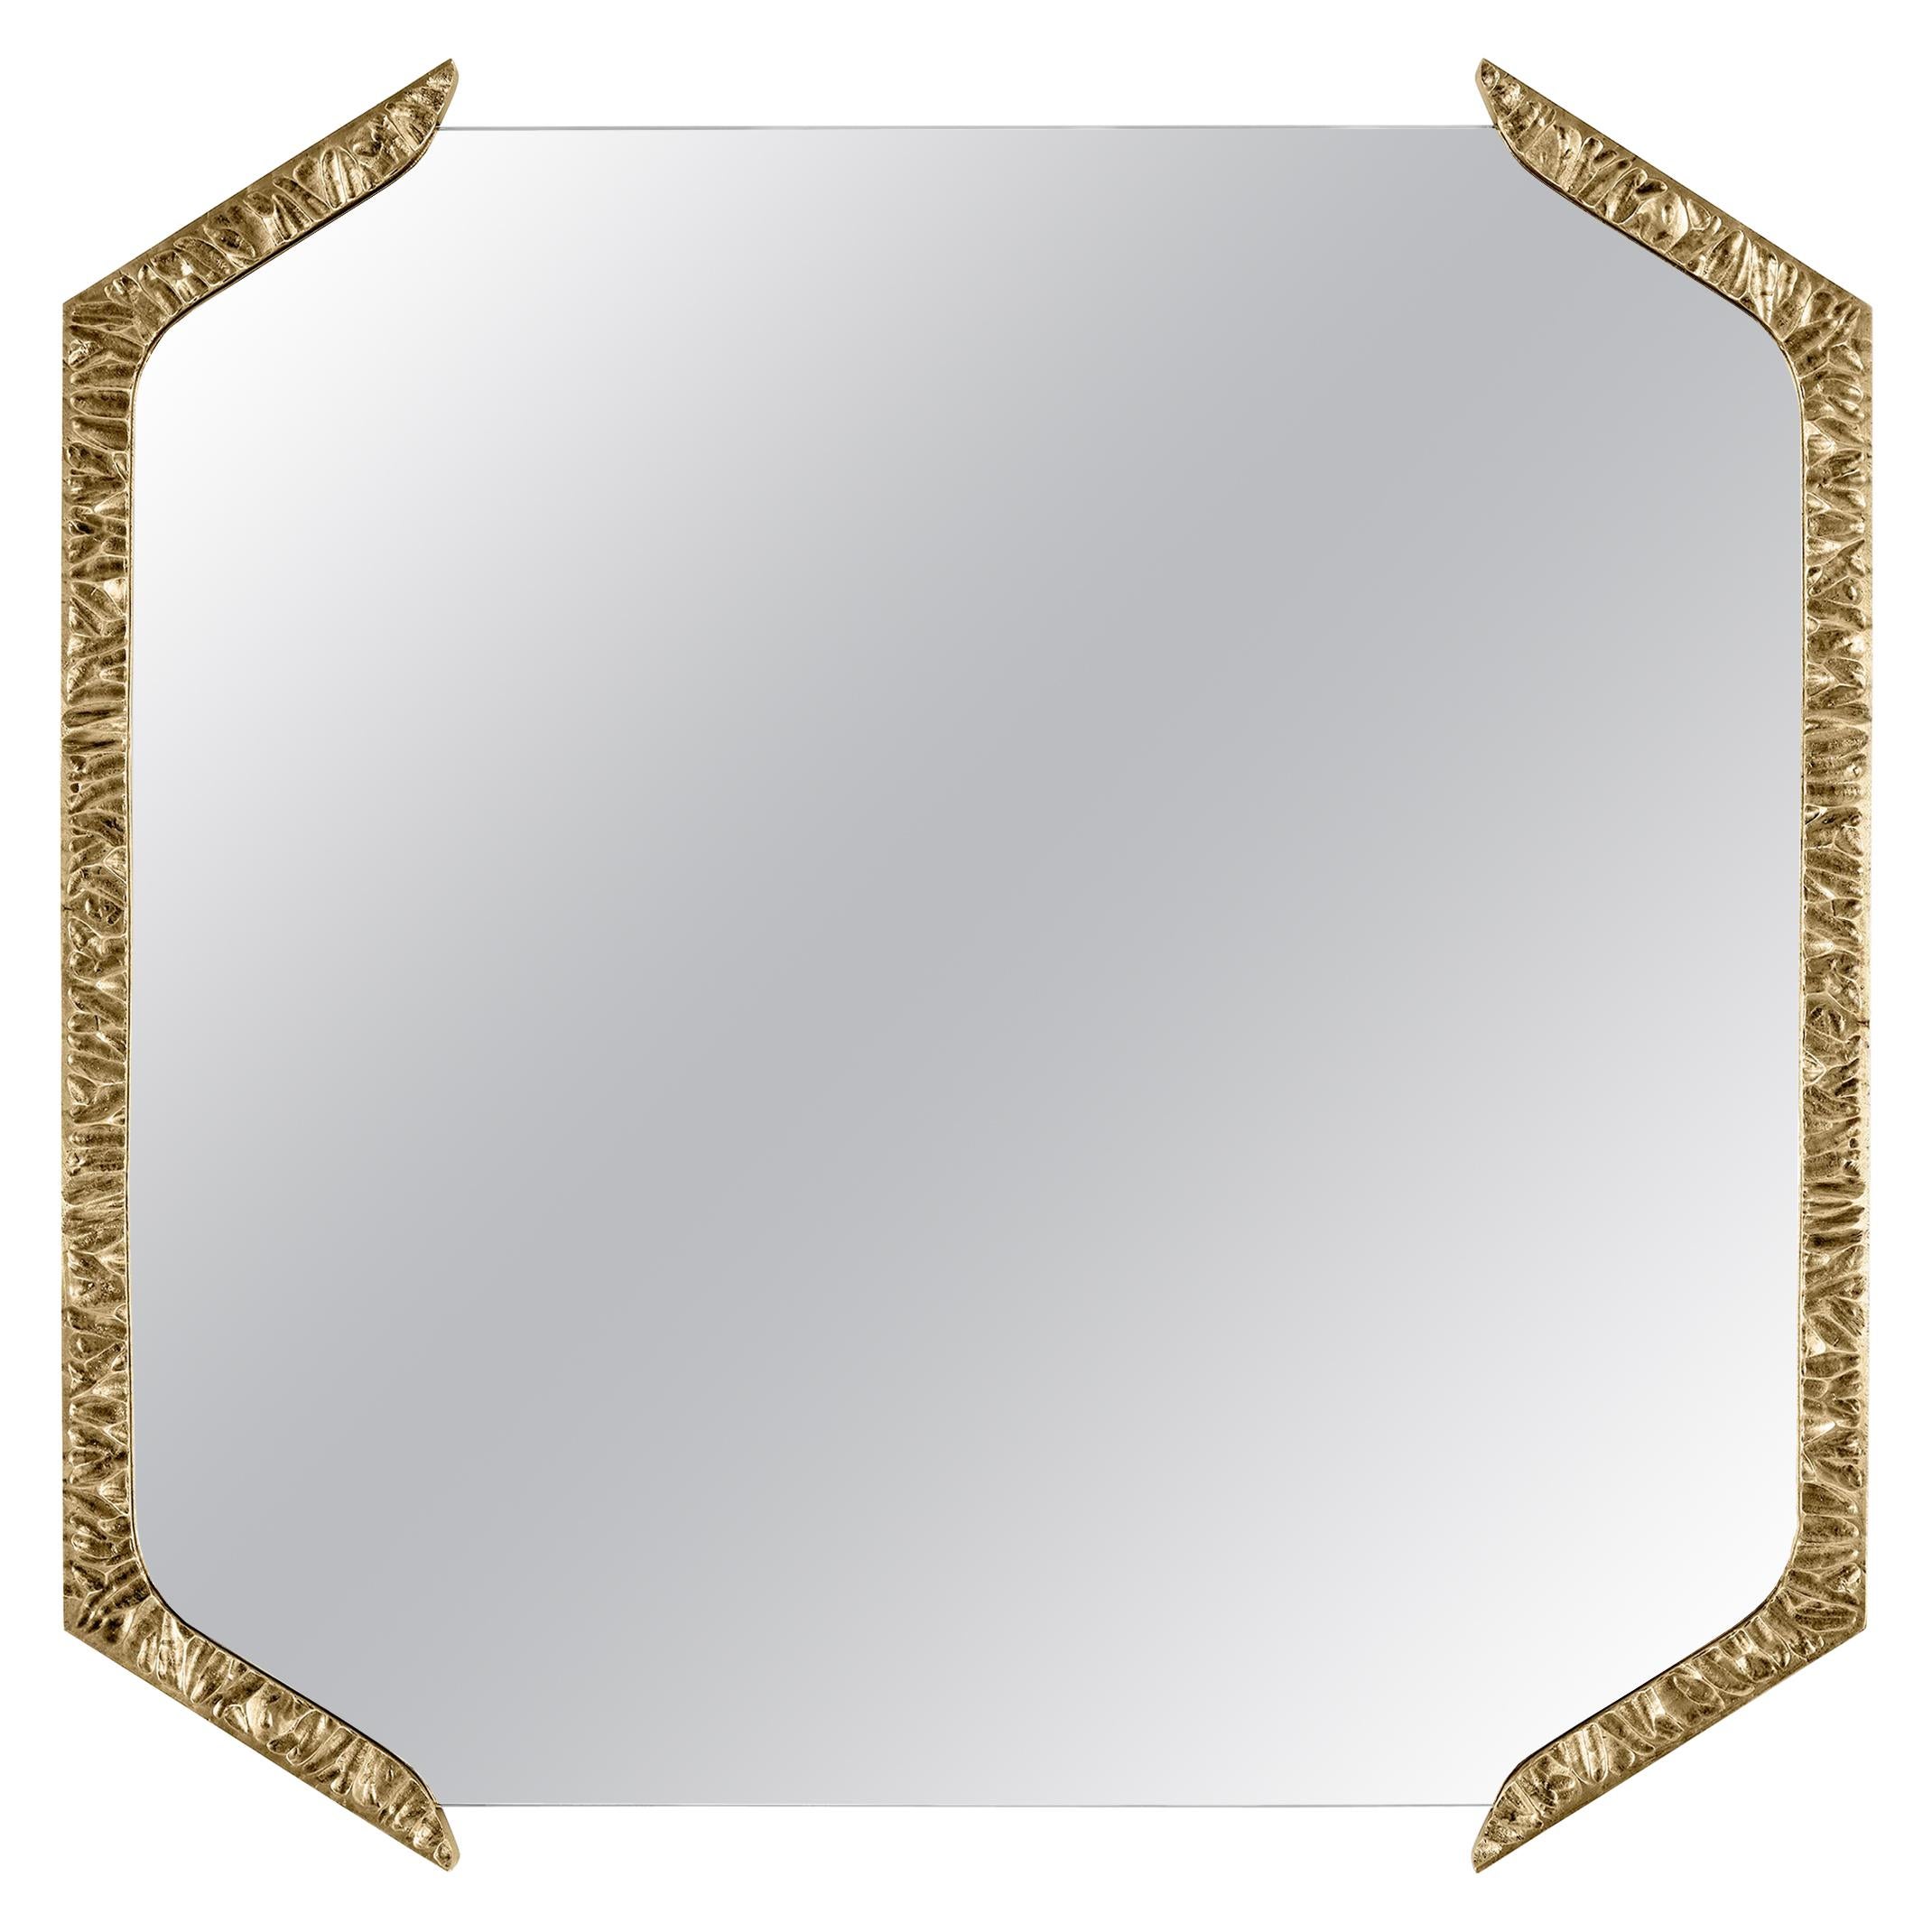 Alentejo Square Mirror, Cast Brass, InsidherLand by Joana Santos Barbosa